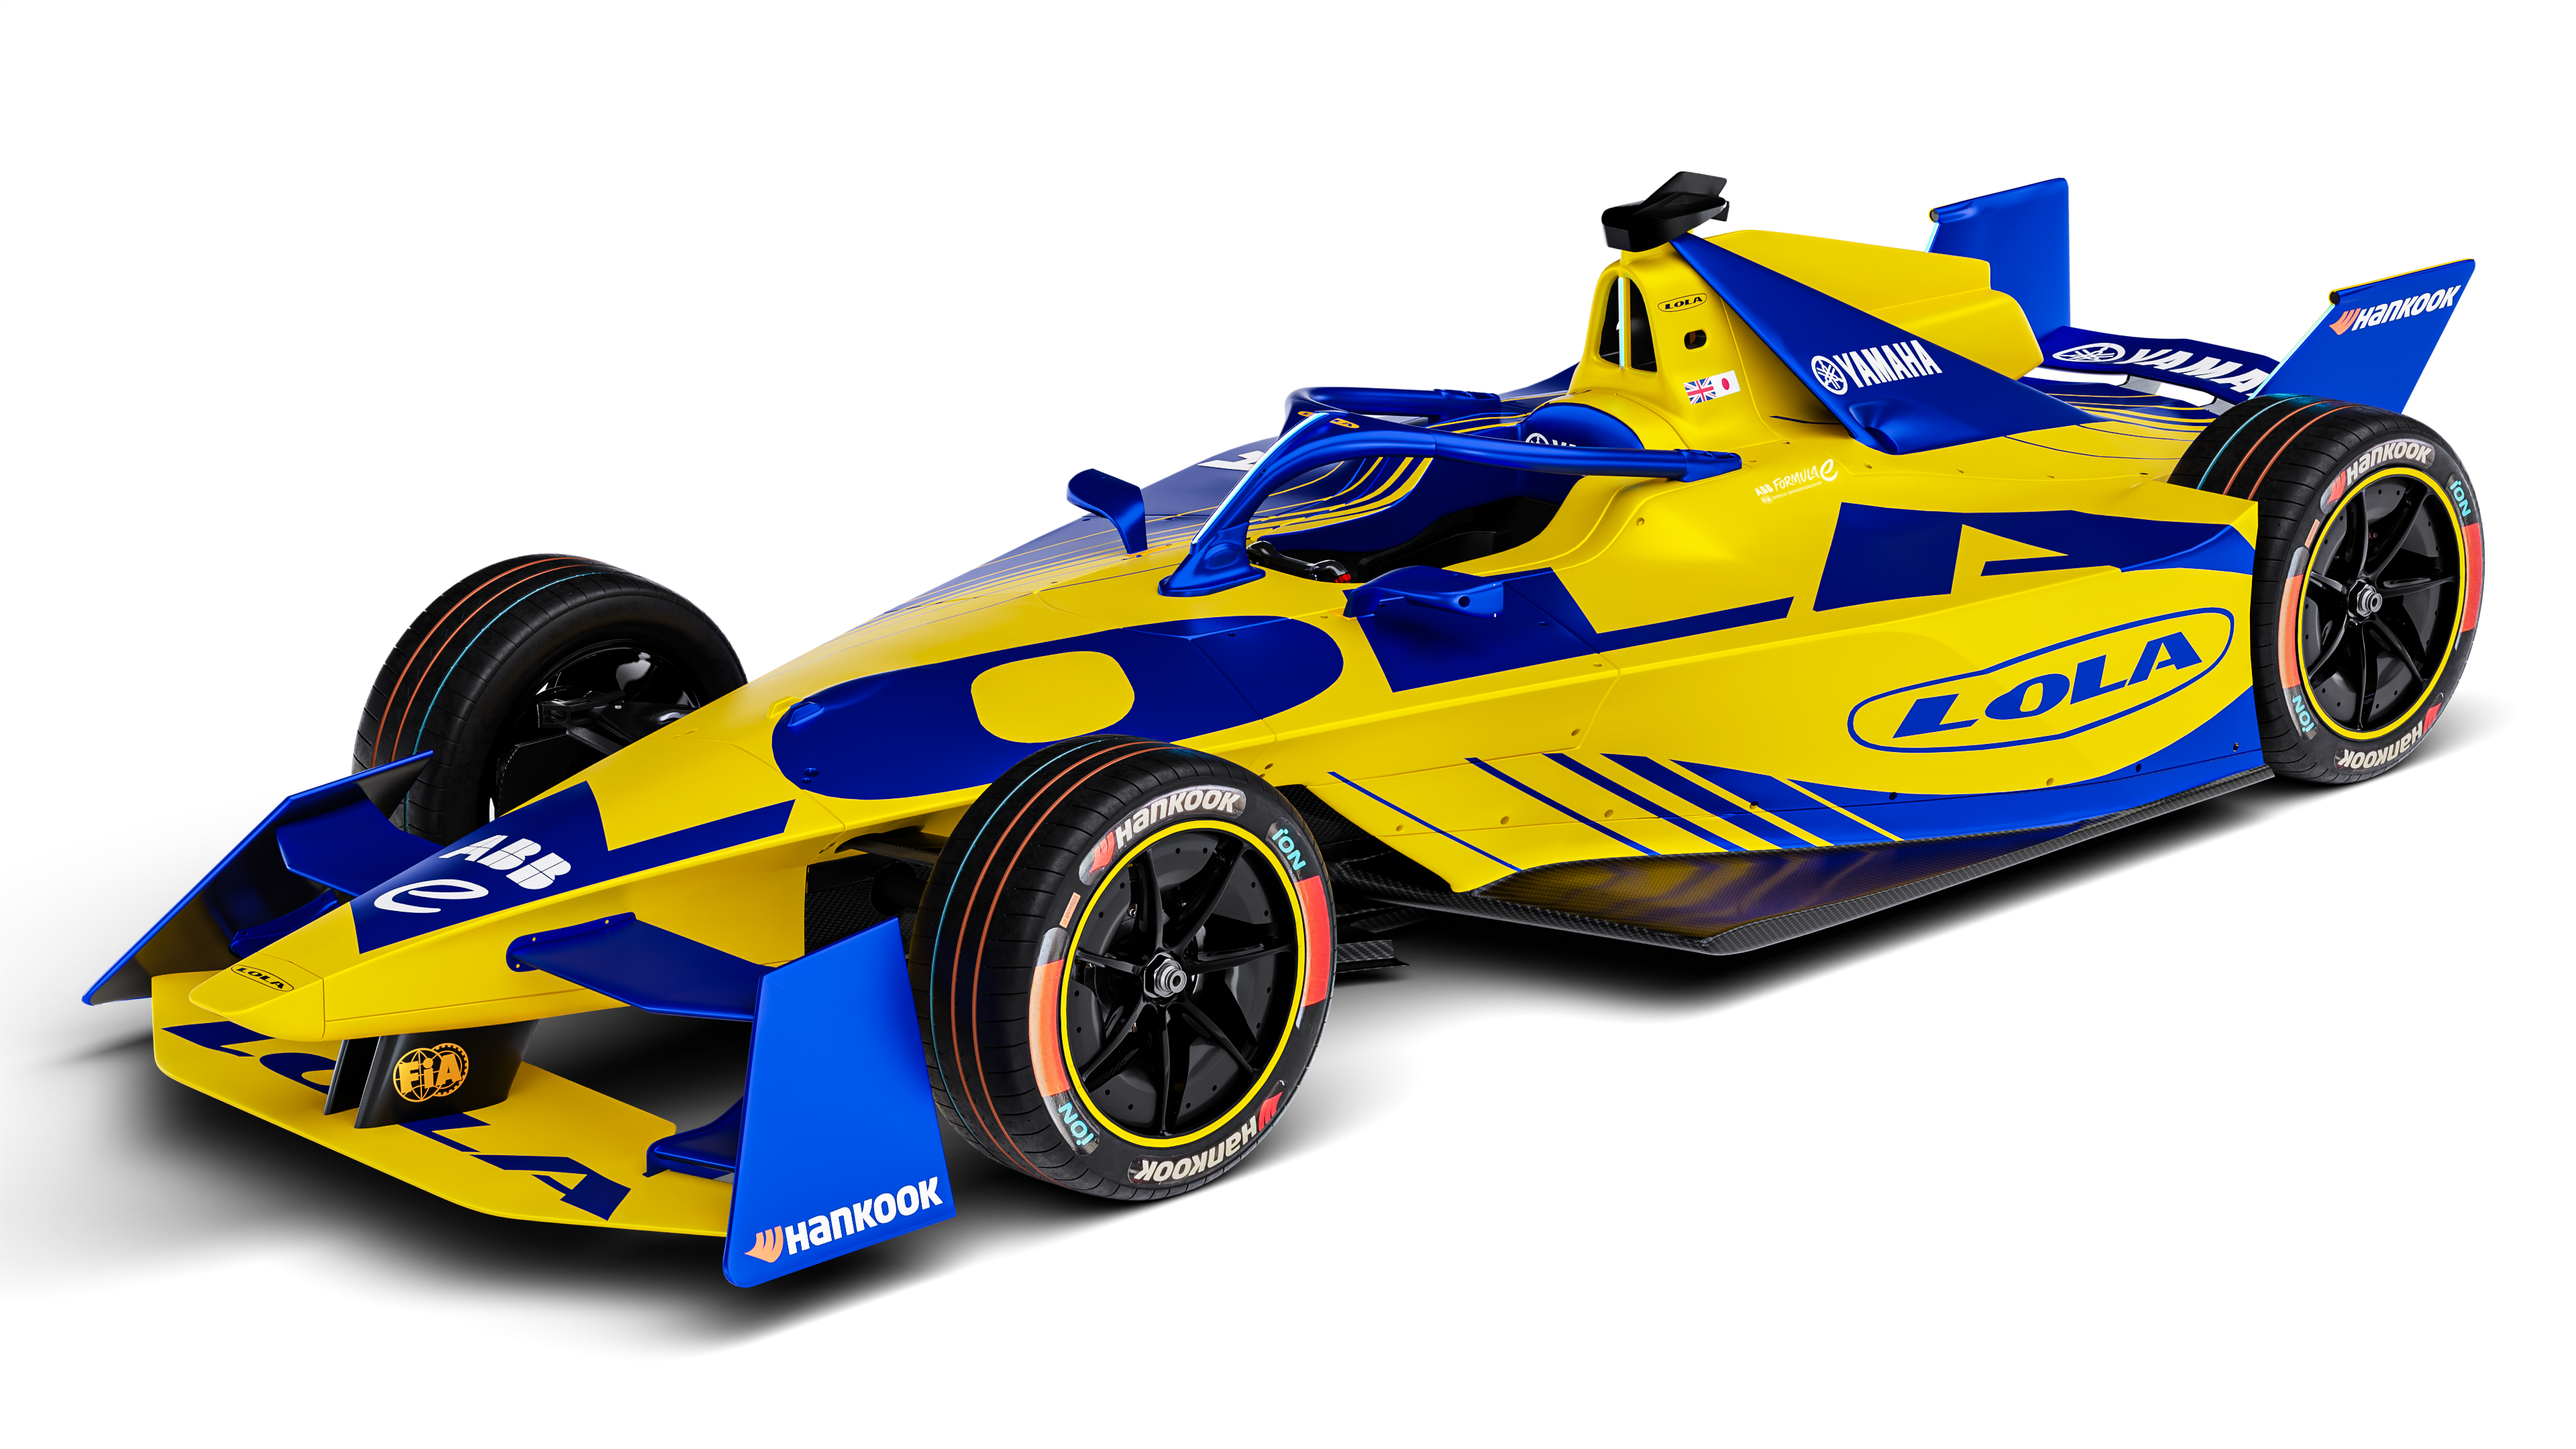 Lola Cars partners with Yamaha for ABB FIA Formula E World Championship